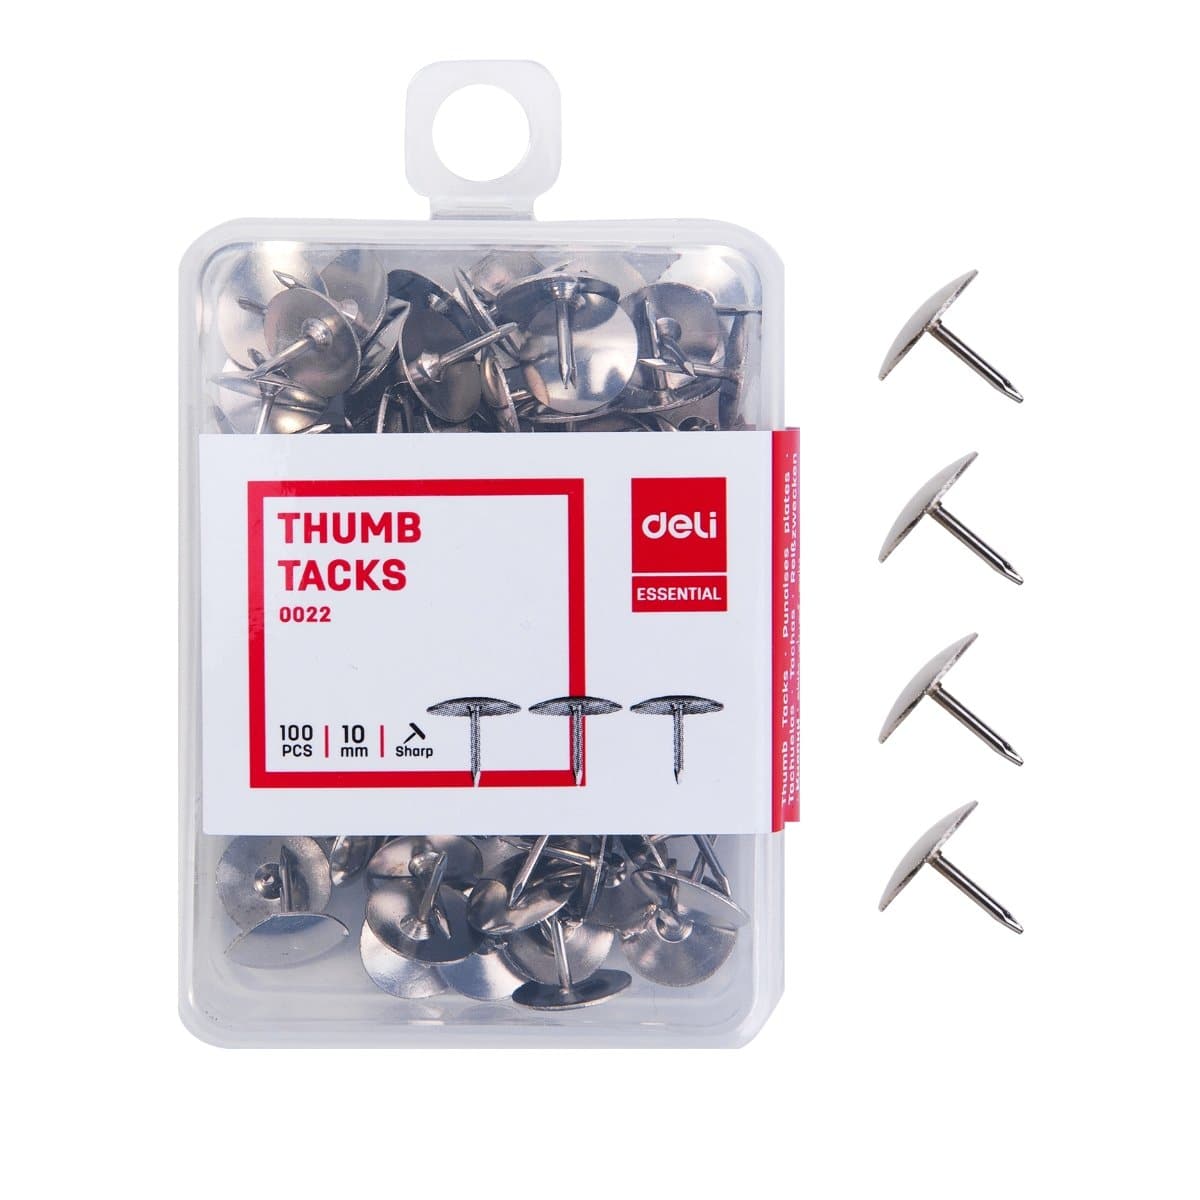 deli Thumb Tacks, 100/pack, Silver